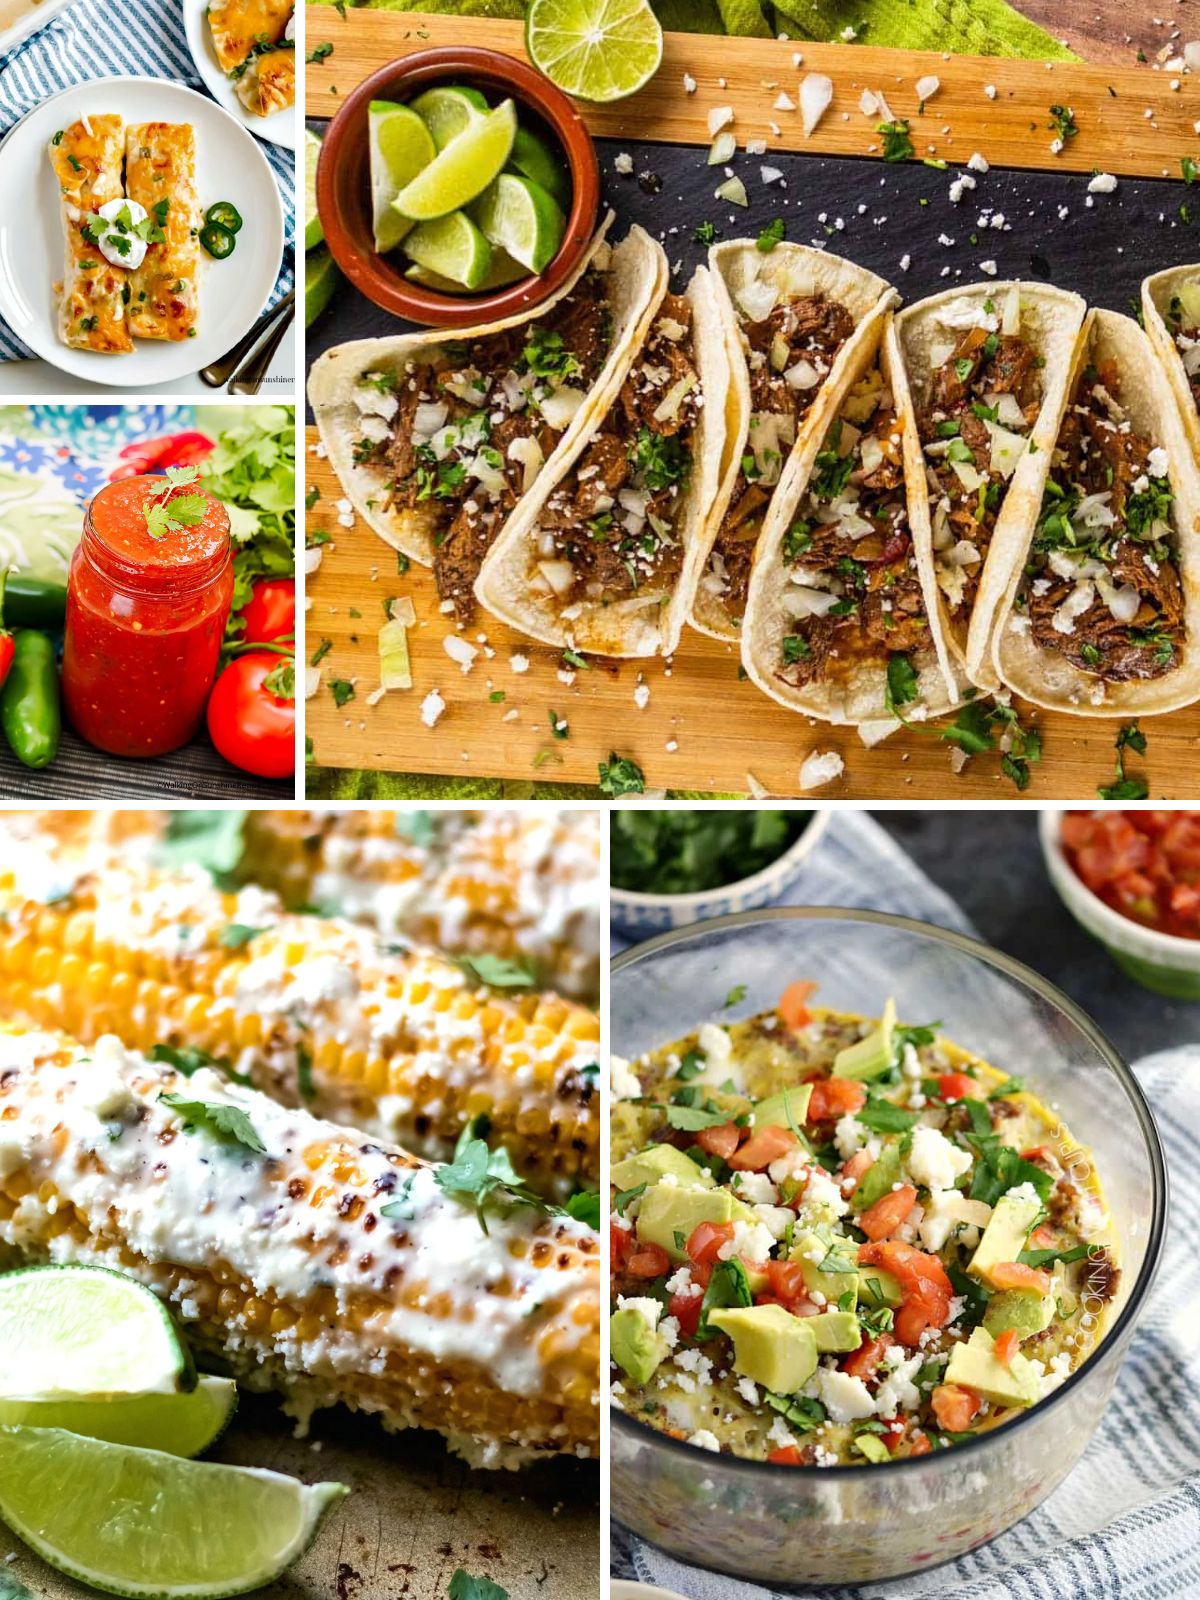 recipes, tacos, enchiladas, margaritas, Mexican food collage.